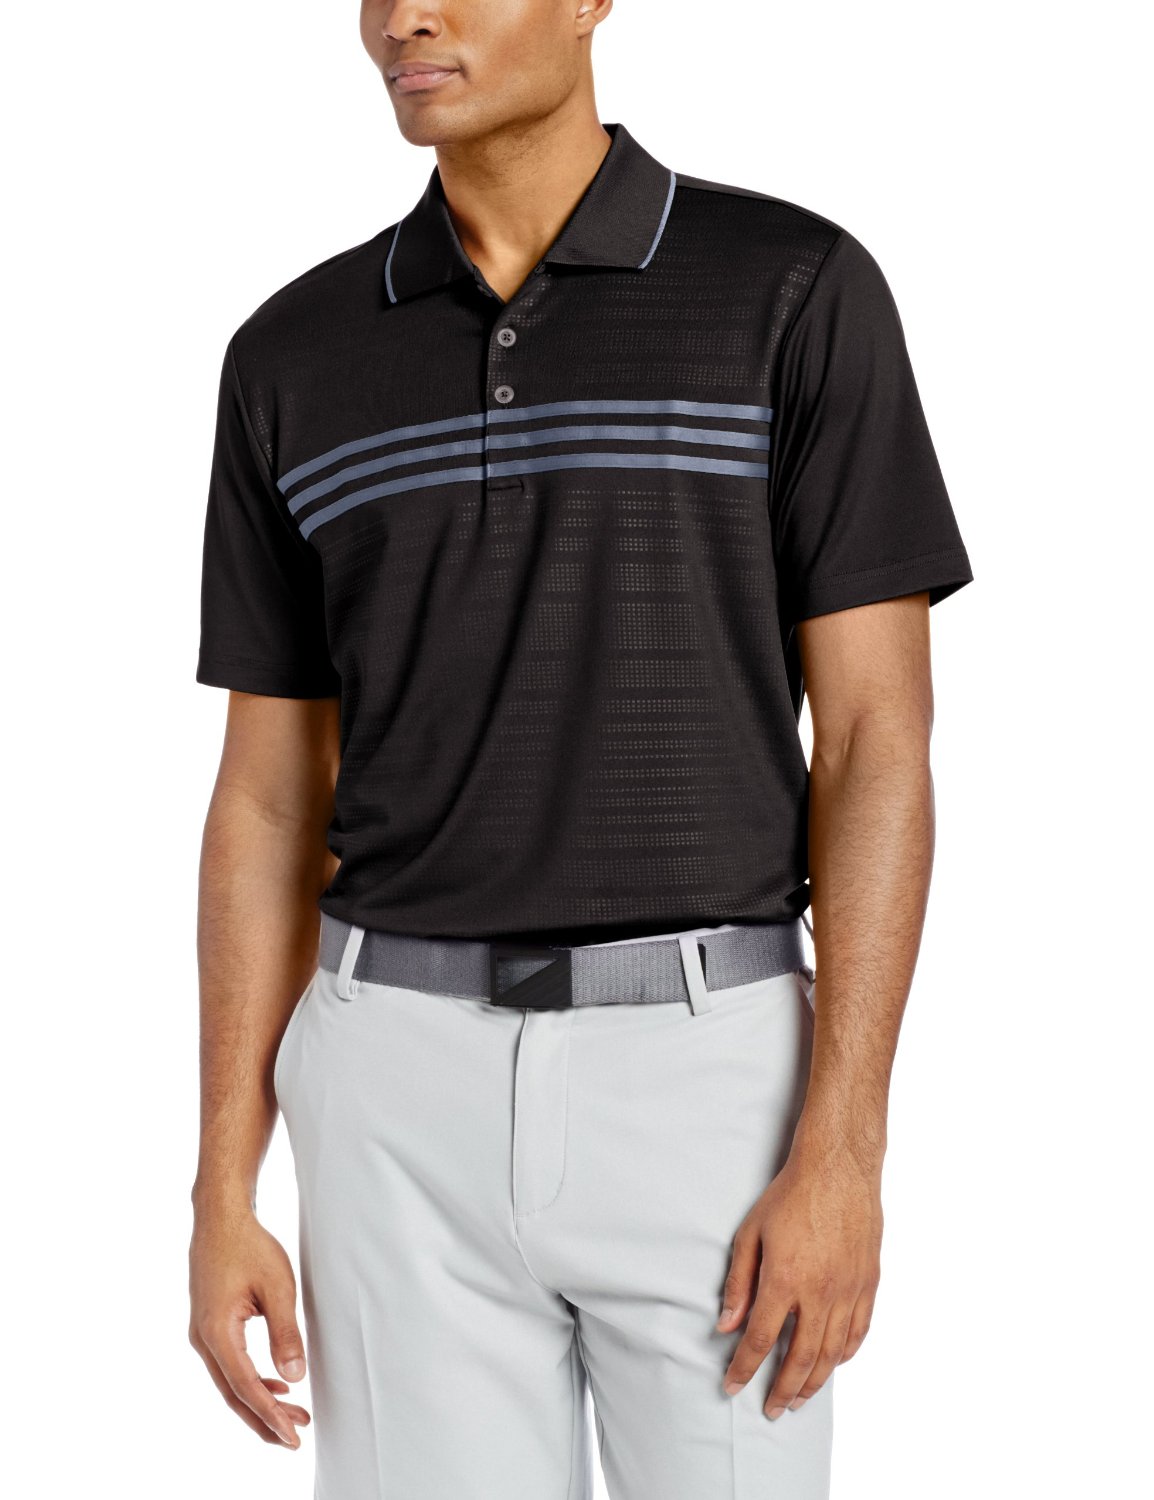 niet verwant kalkoen inhoudsopgave Adidas Mens Puremotion Climacool 3 Stripes Chest Golf Polo Shirts